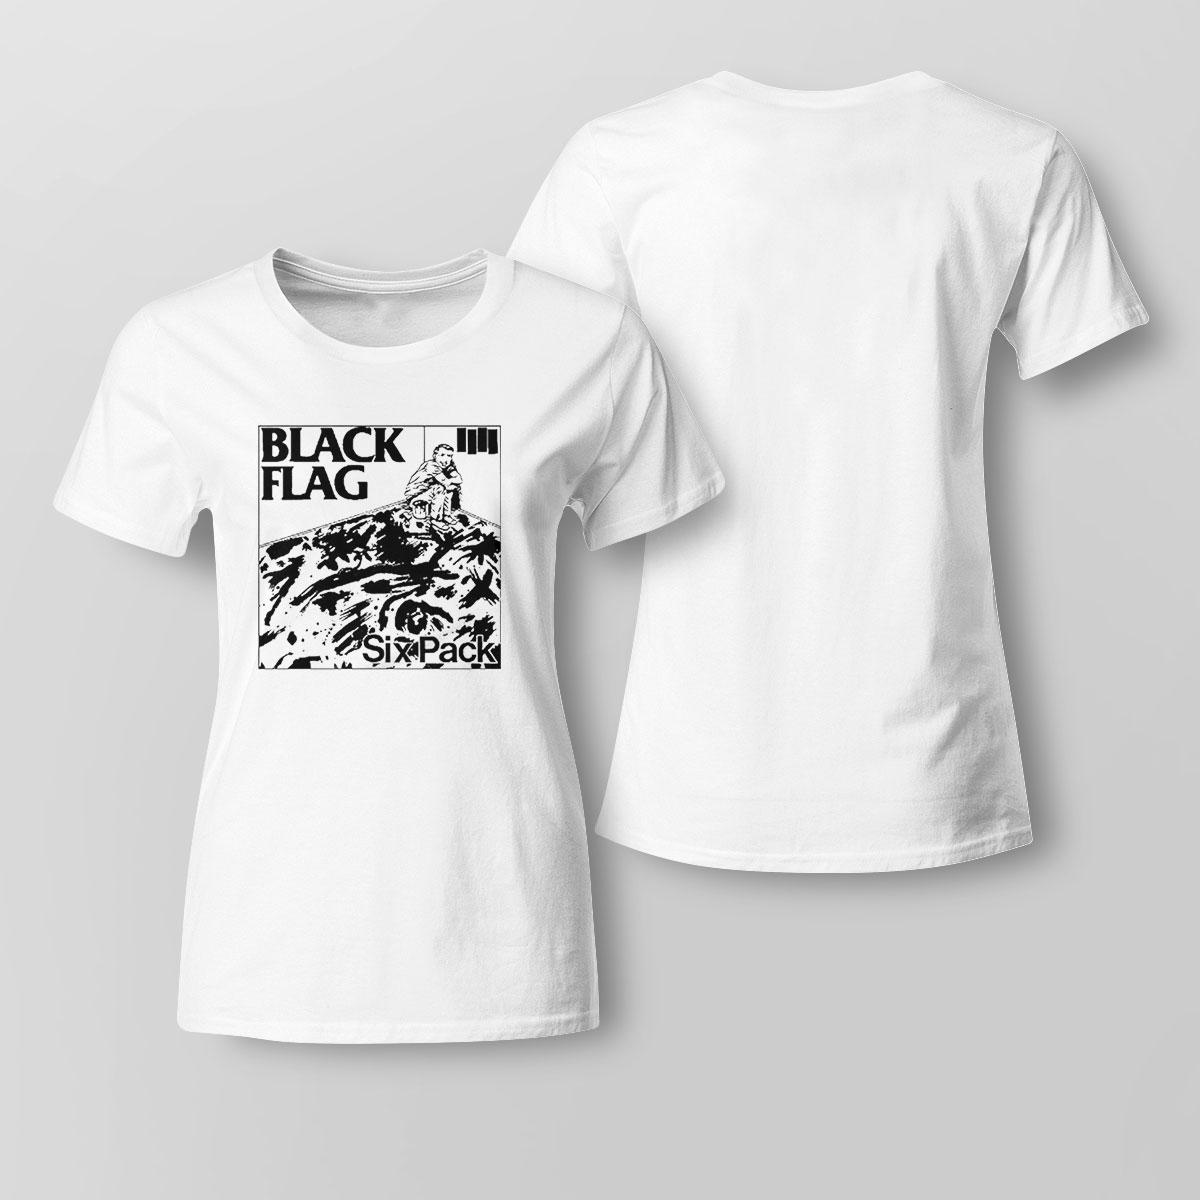 Black Flag Six Pack Shirt Sweatshirt